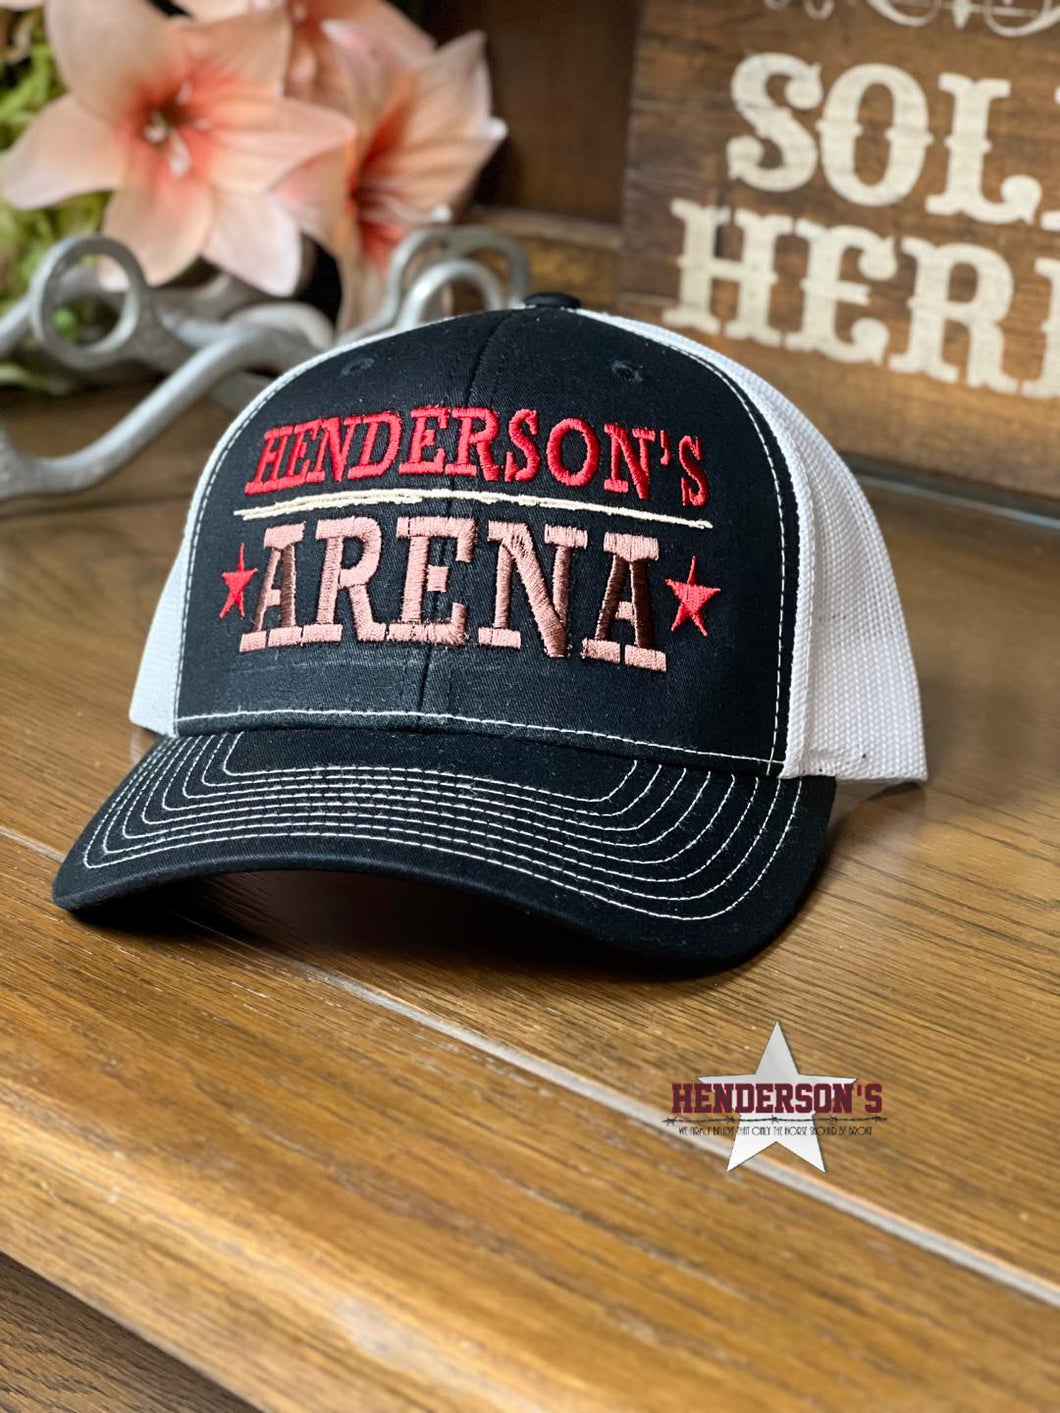 Henderson's Arena Ball Cap - Henderson's Western Store